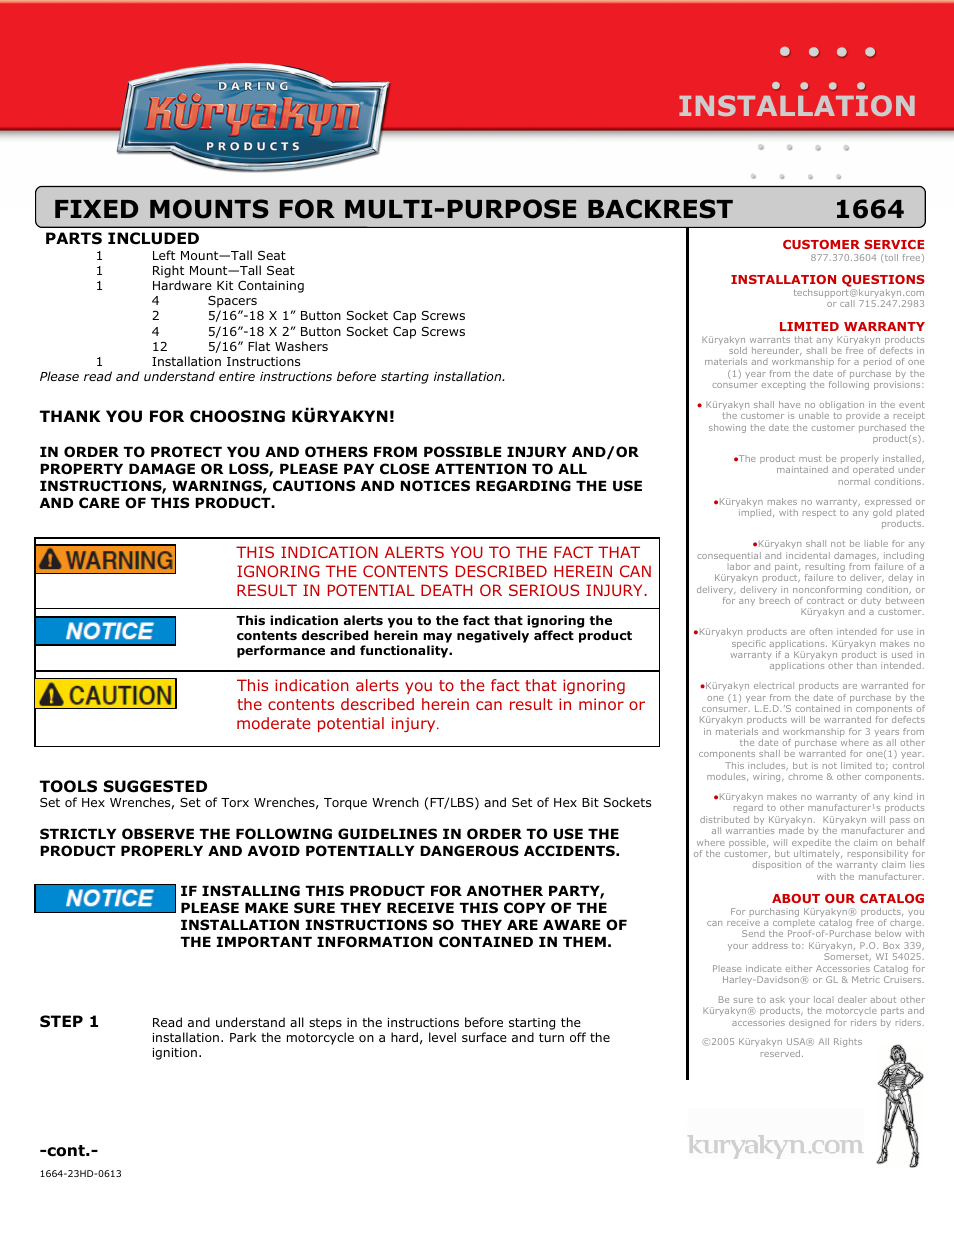 1664 FIXED MOUNTS FOR MULTI-PURPOSE BACKREST